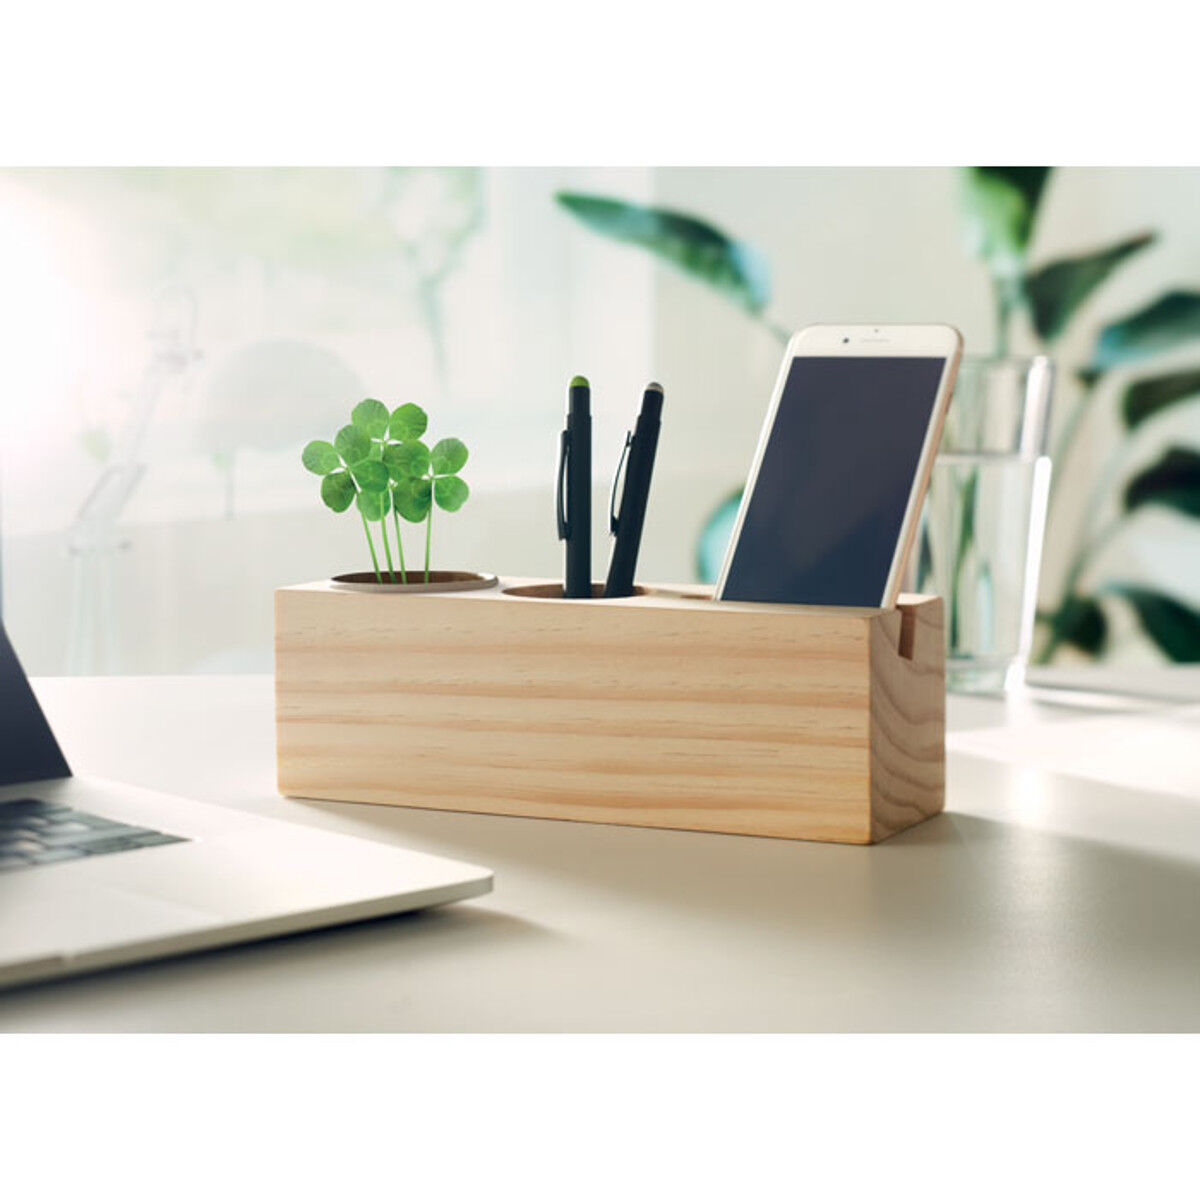  Wooden Desk Tidy & Plant Pot